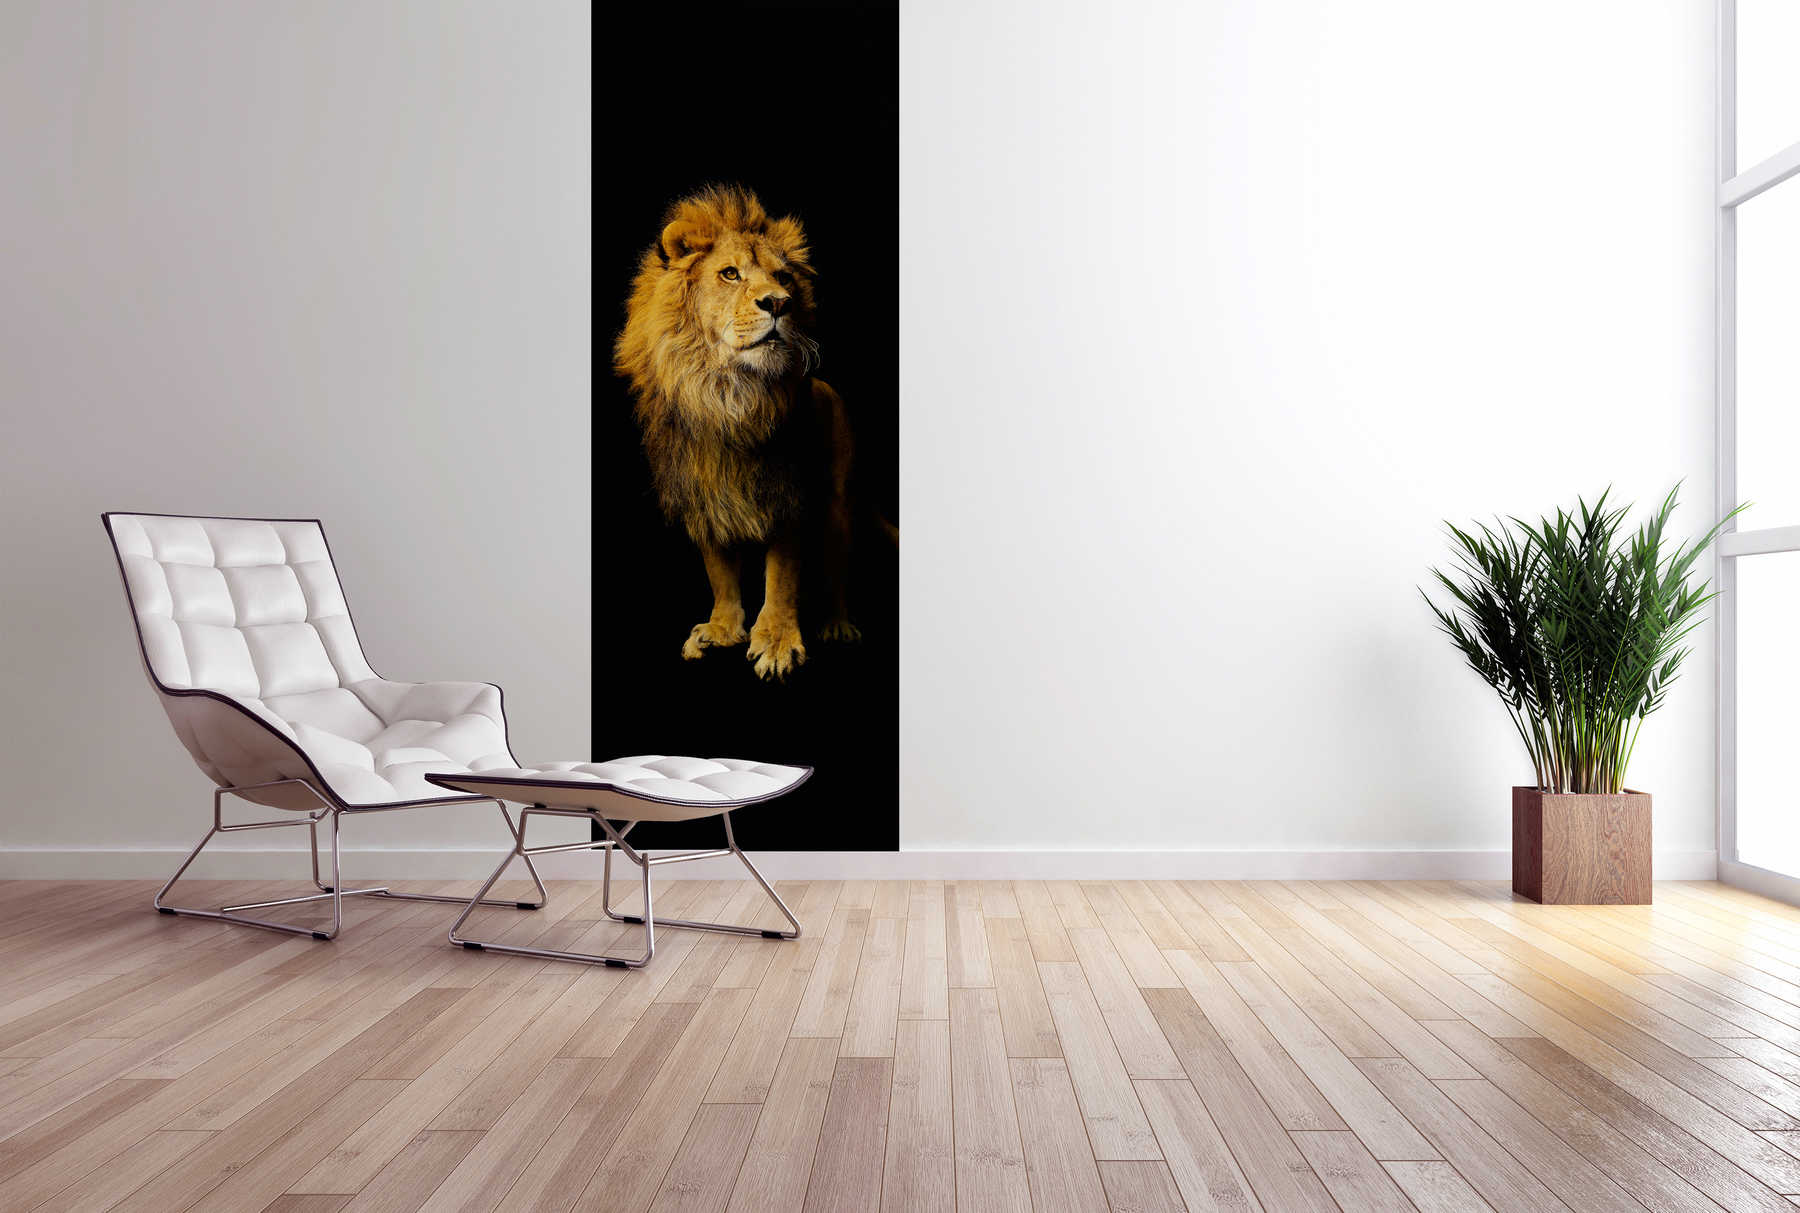             Tier Fototapete Löwen Motiv auf Premium Glattvlies
        